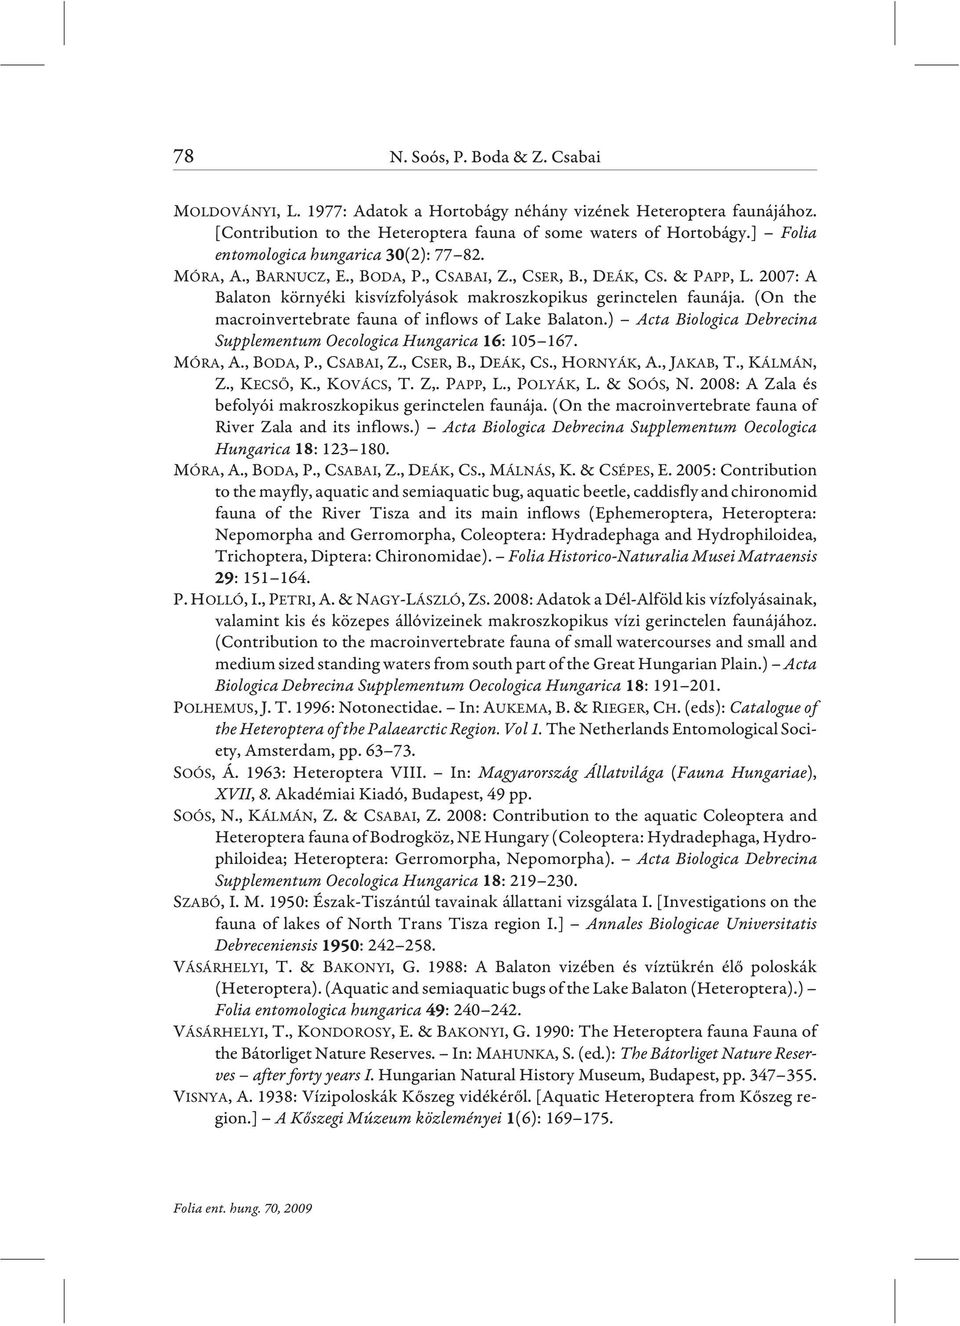 (On the macroinvertebrate fauna of inflows of Lake Balaton.) Acta Biologica Debrecina Supplementum Oecologica Hungarica : 105 167. MÓRA, A., BODA, P., CSABAI, Z., CSER, B., DEÁK, CS., HORNYÁK, A.